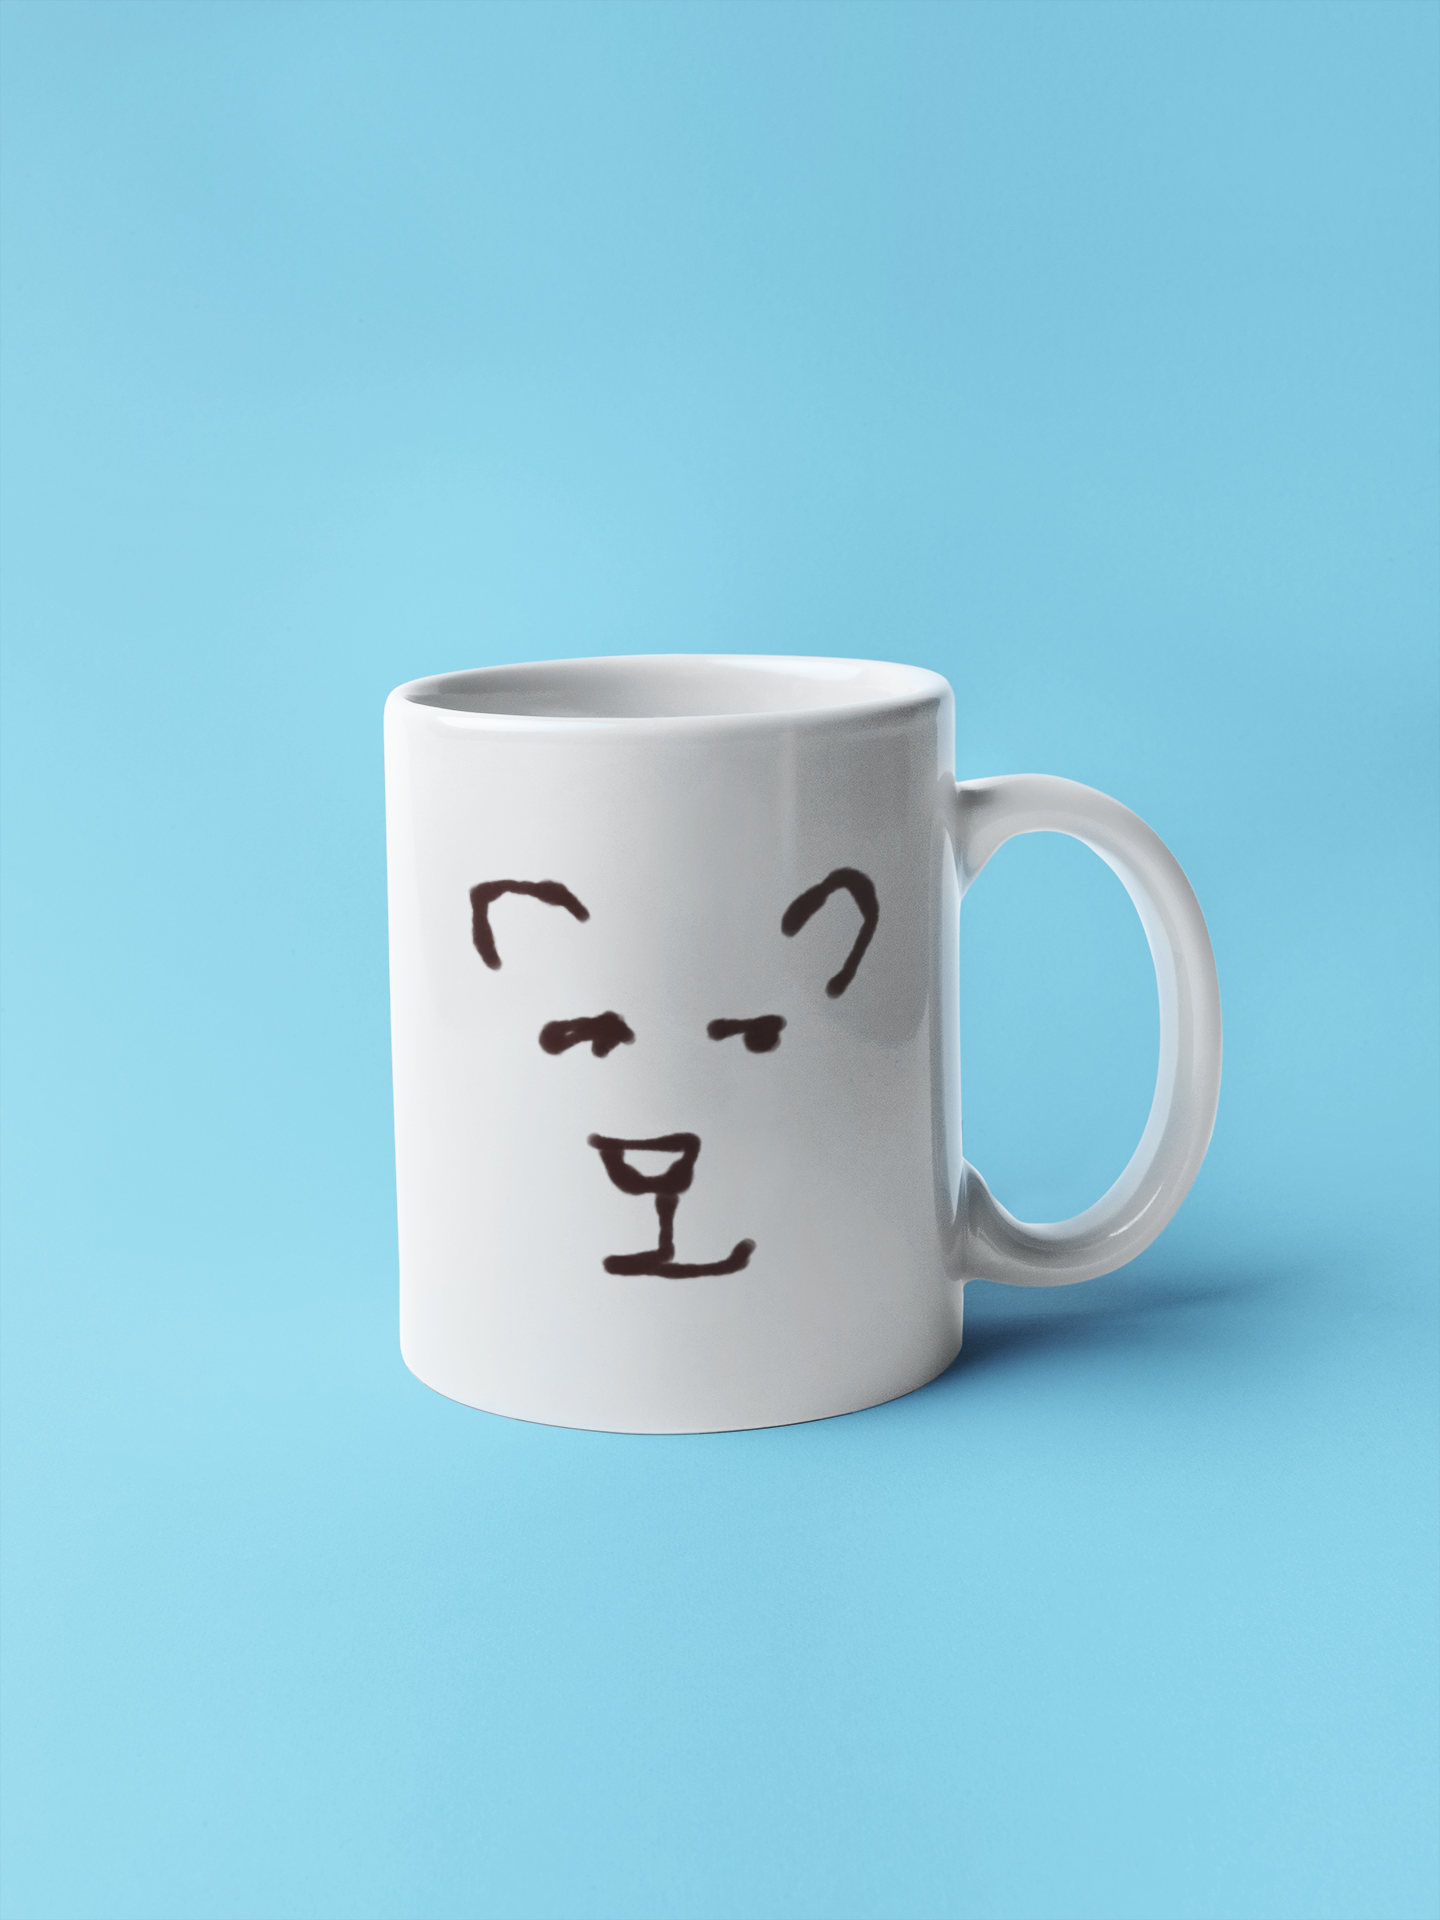 Polar Bear coffee mug - Cute illustrated bear mugs by Hector and Bone